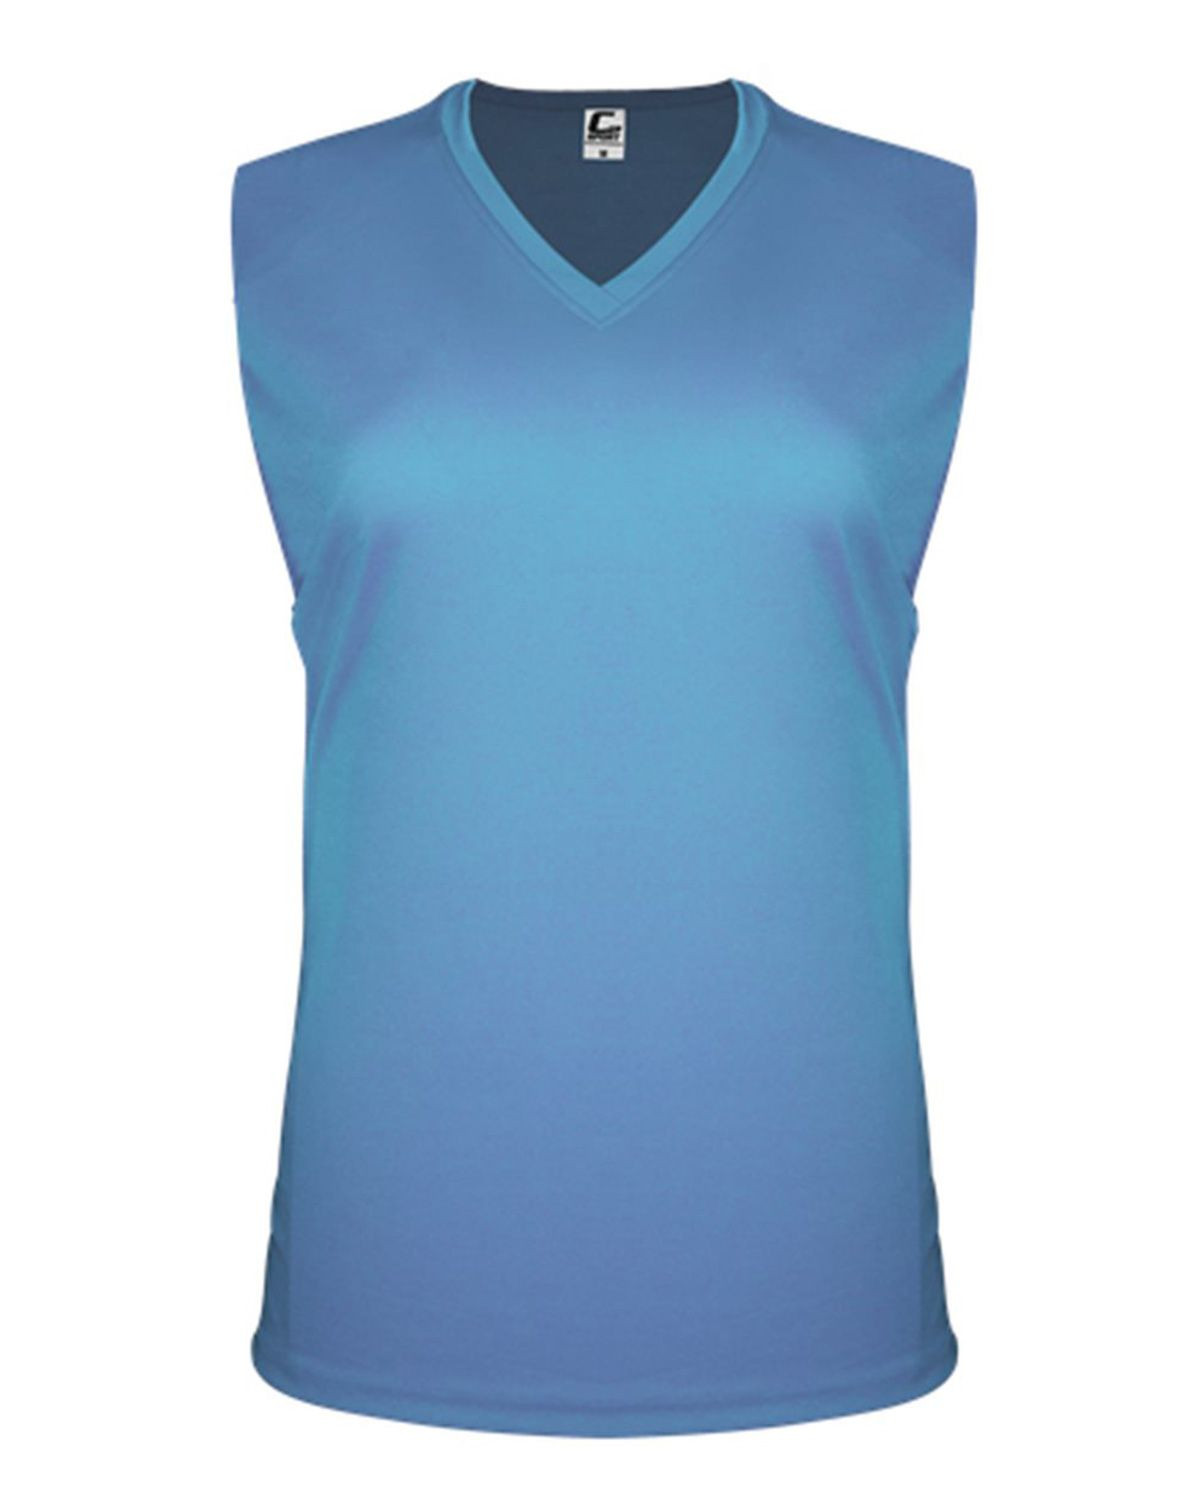 C2 Sport 5663 Women's Sleeveless Tee - Columbia Blue - XS #sleeveless